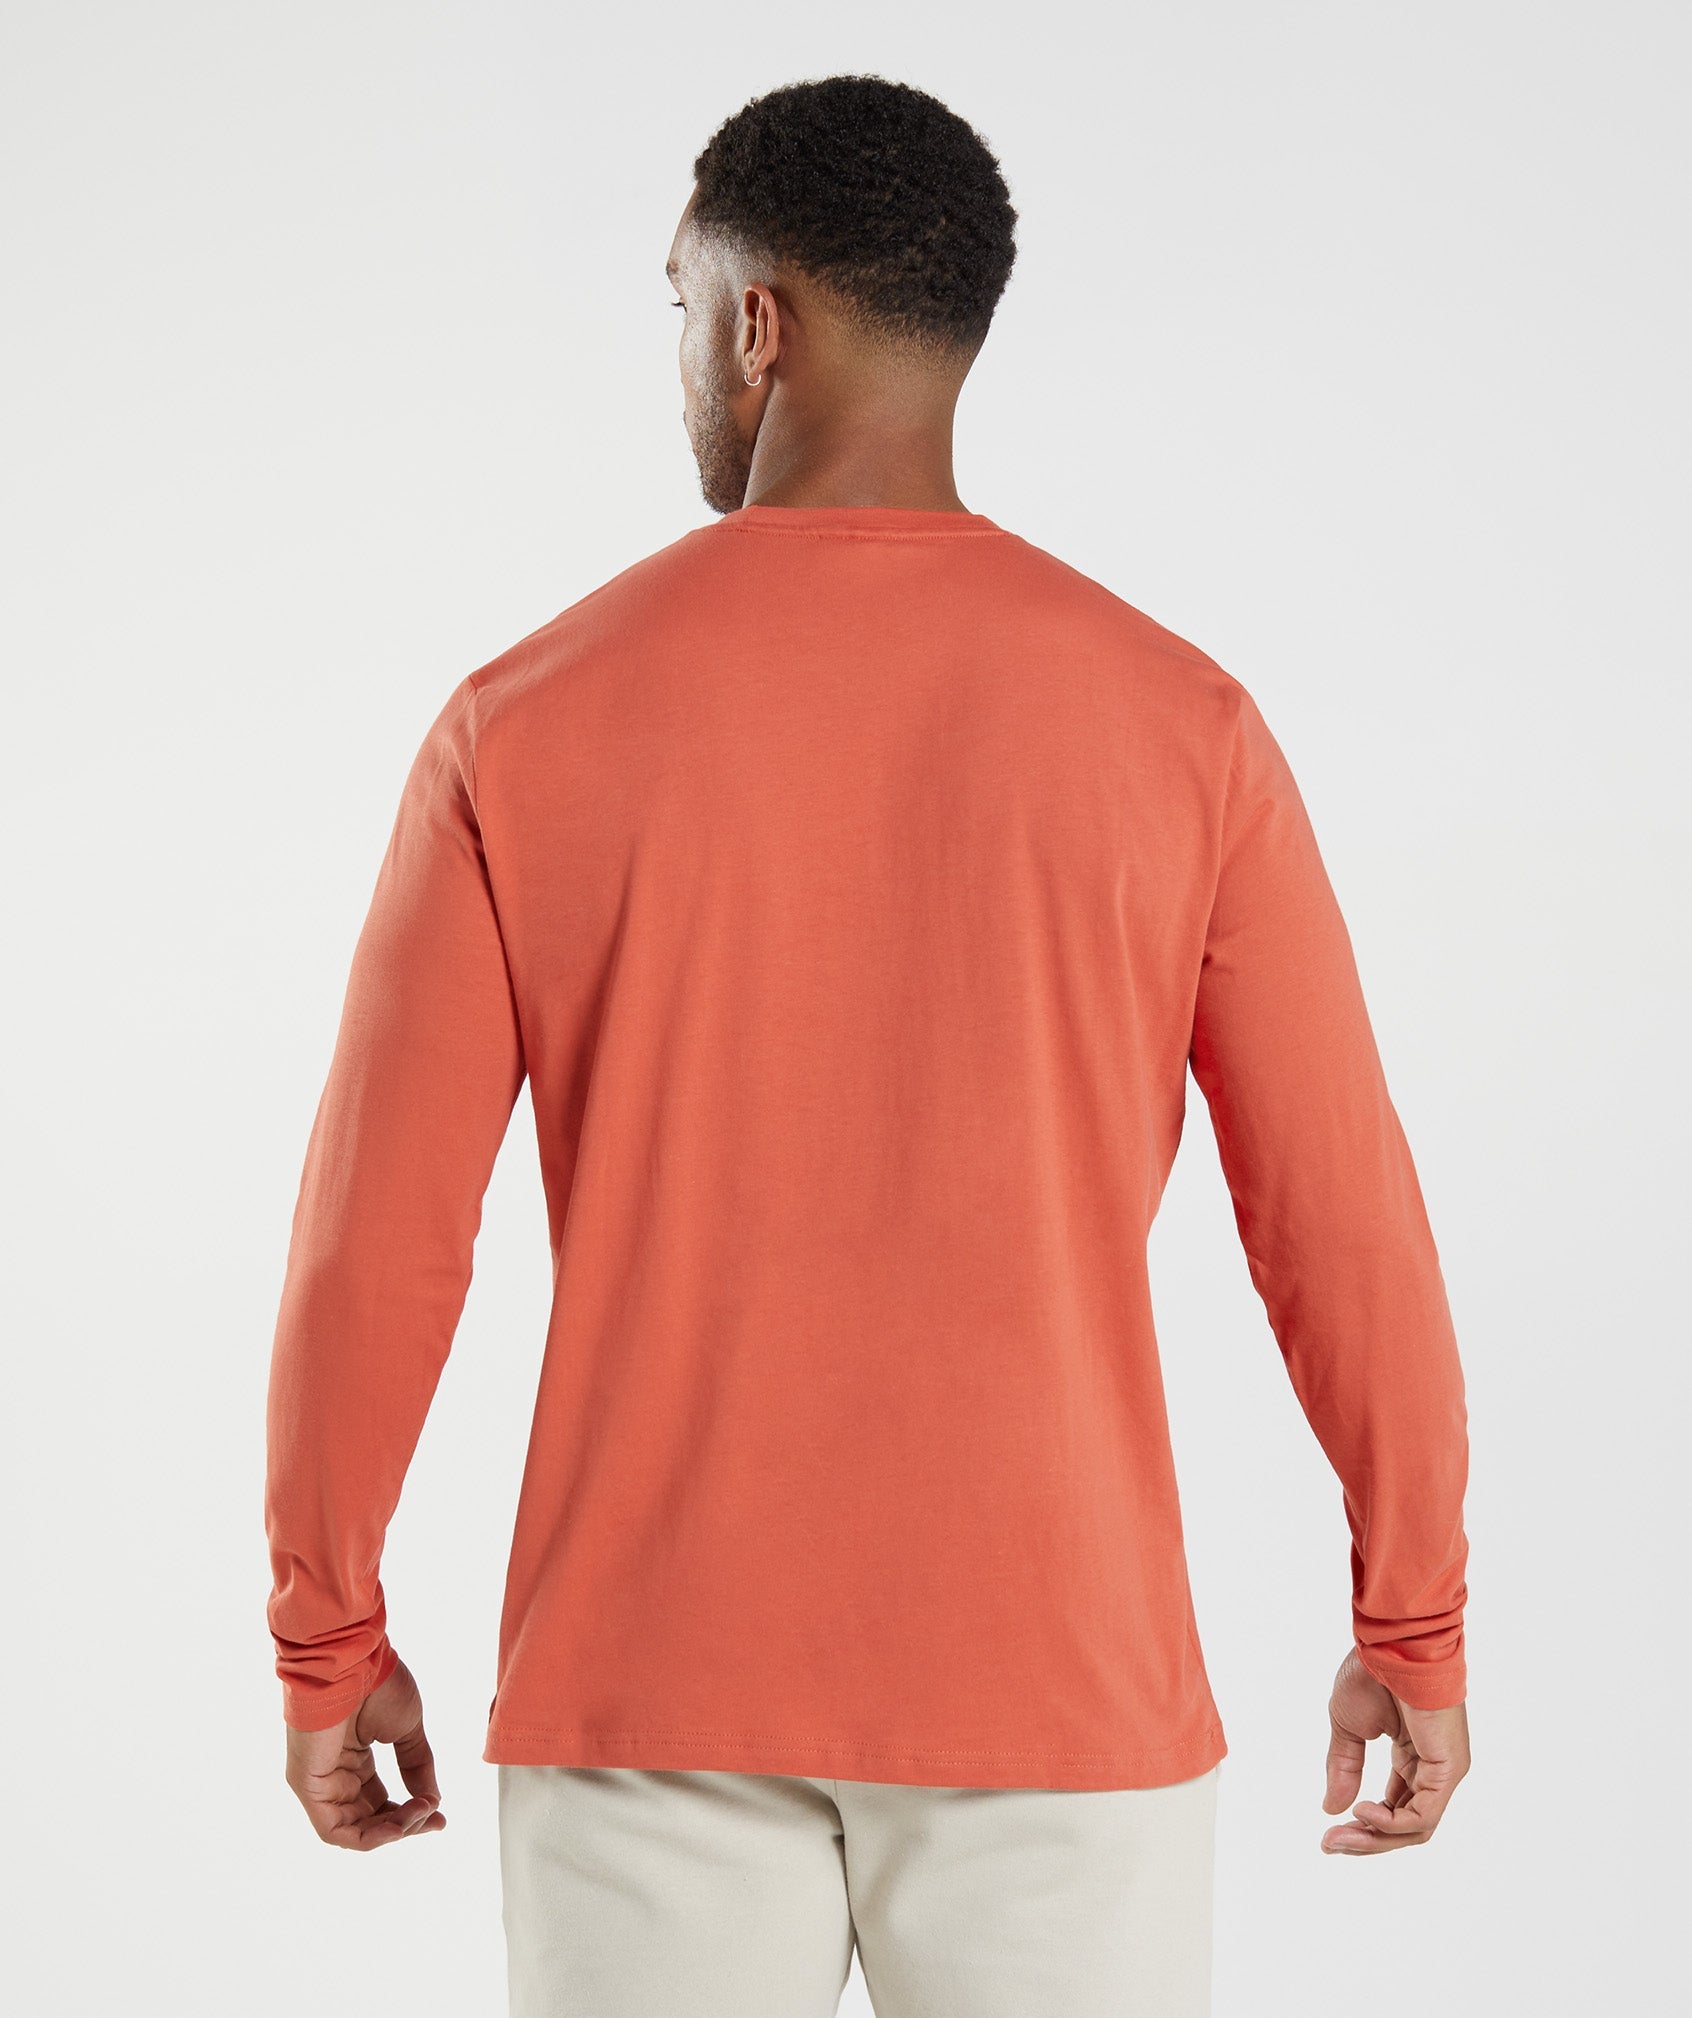 Gymshark Crest Long Sleeve T-Shirt - Persimmon Red